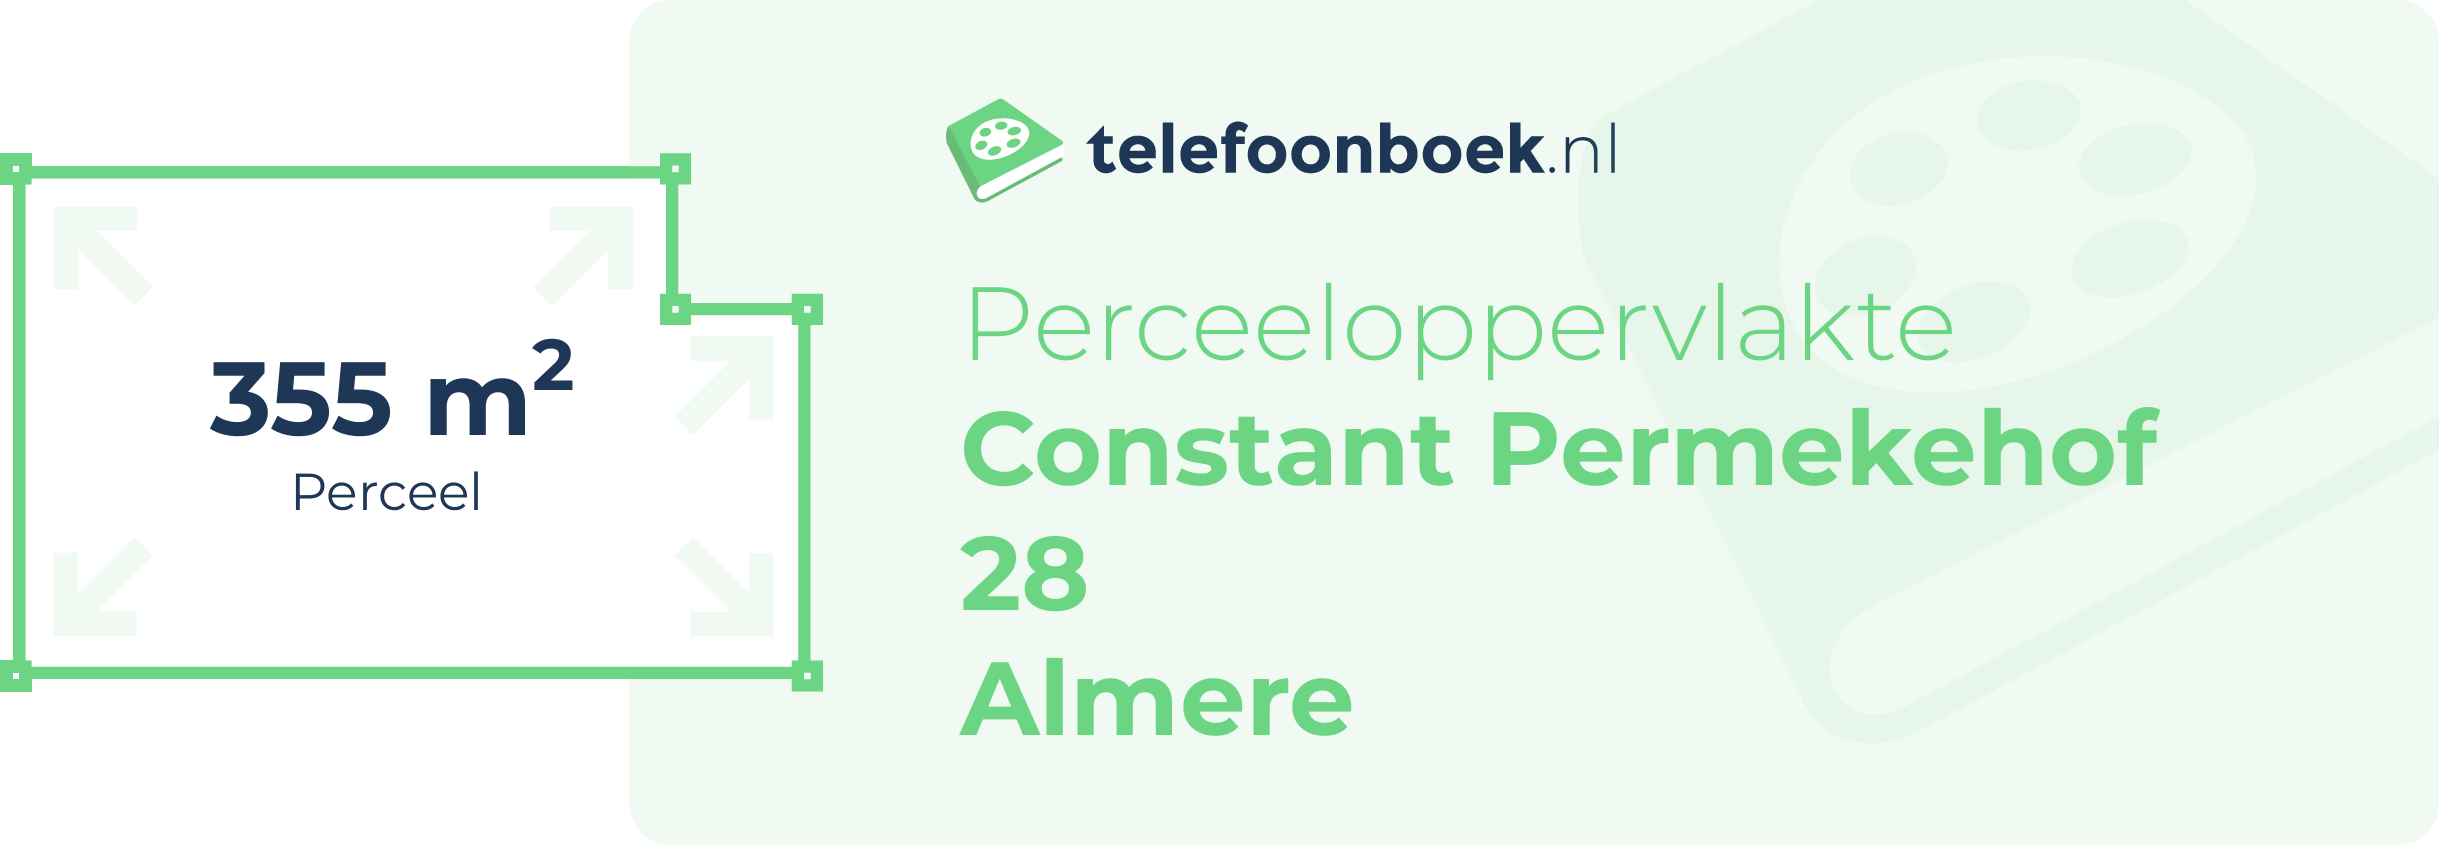 Perceeloppervlakte Constant Permekehof 28 Almere